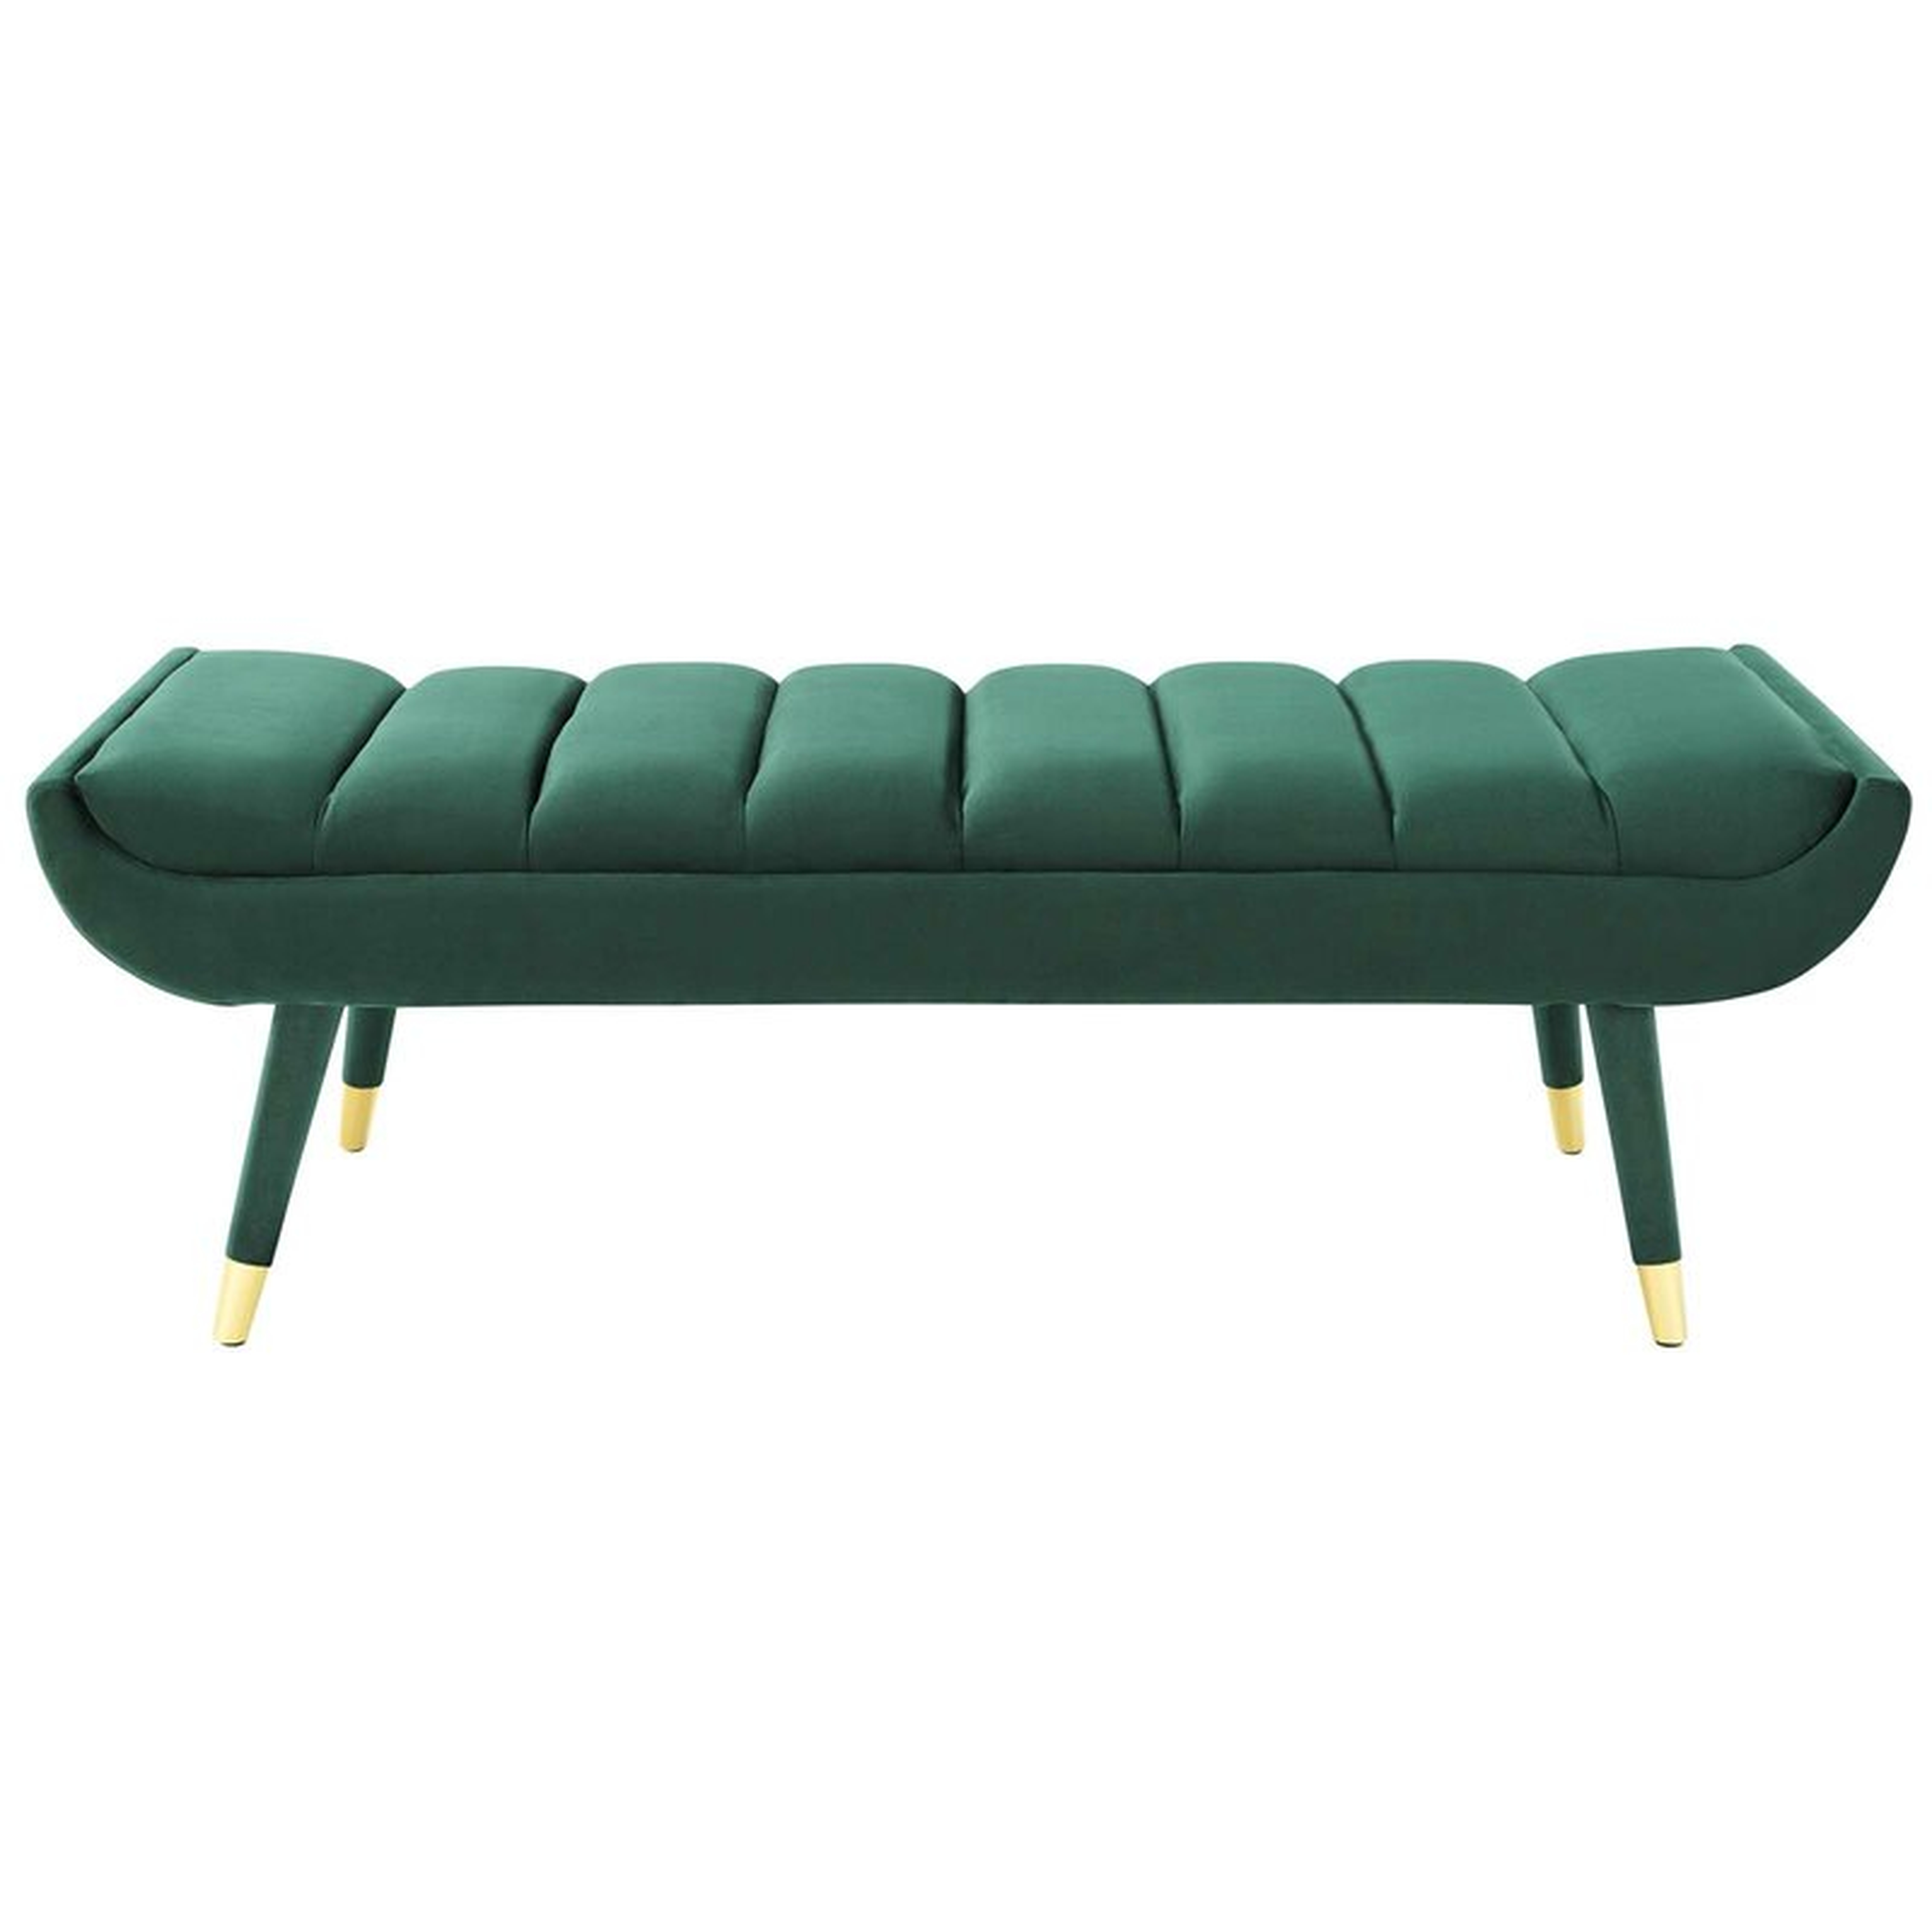 Mackay Upholstered Bench - Wayfair